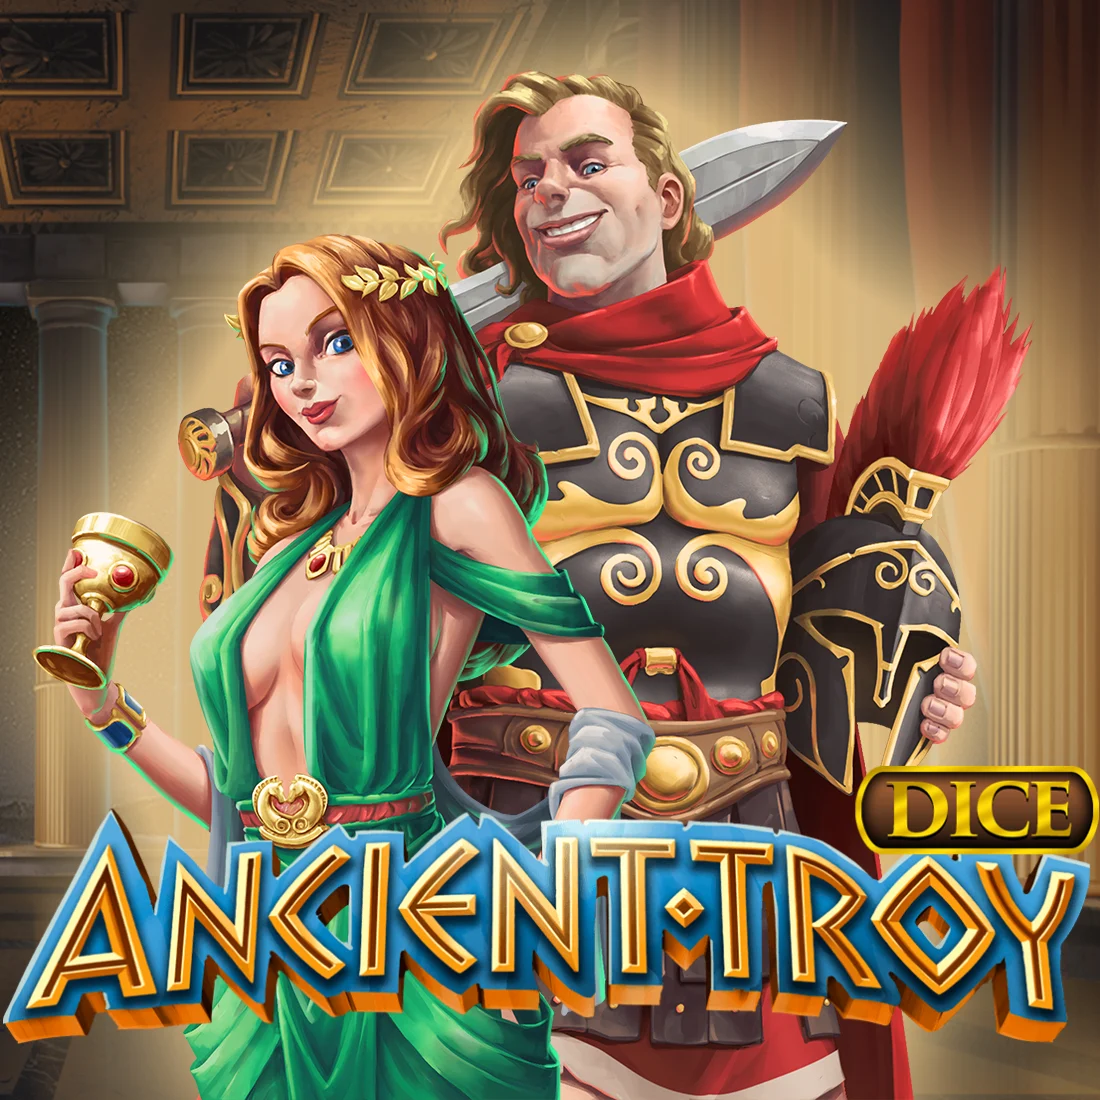 Play Ancient Troy Dice on Starcasinodice online casino